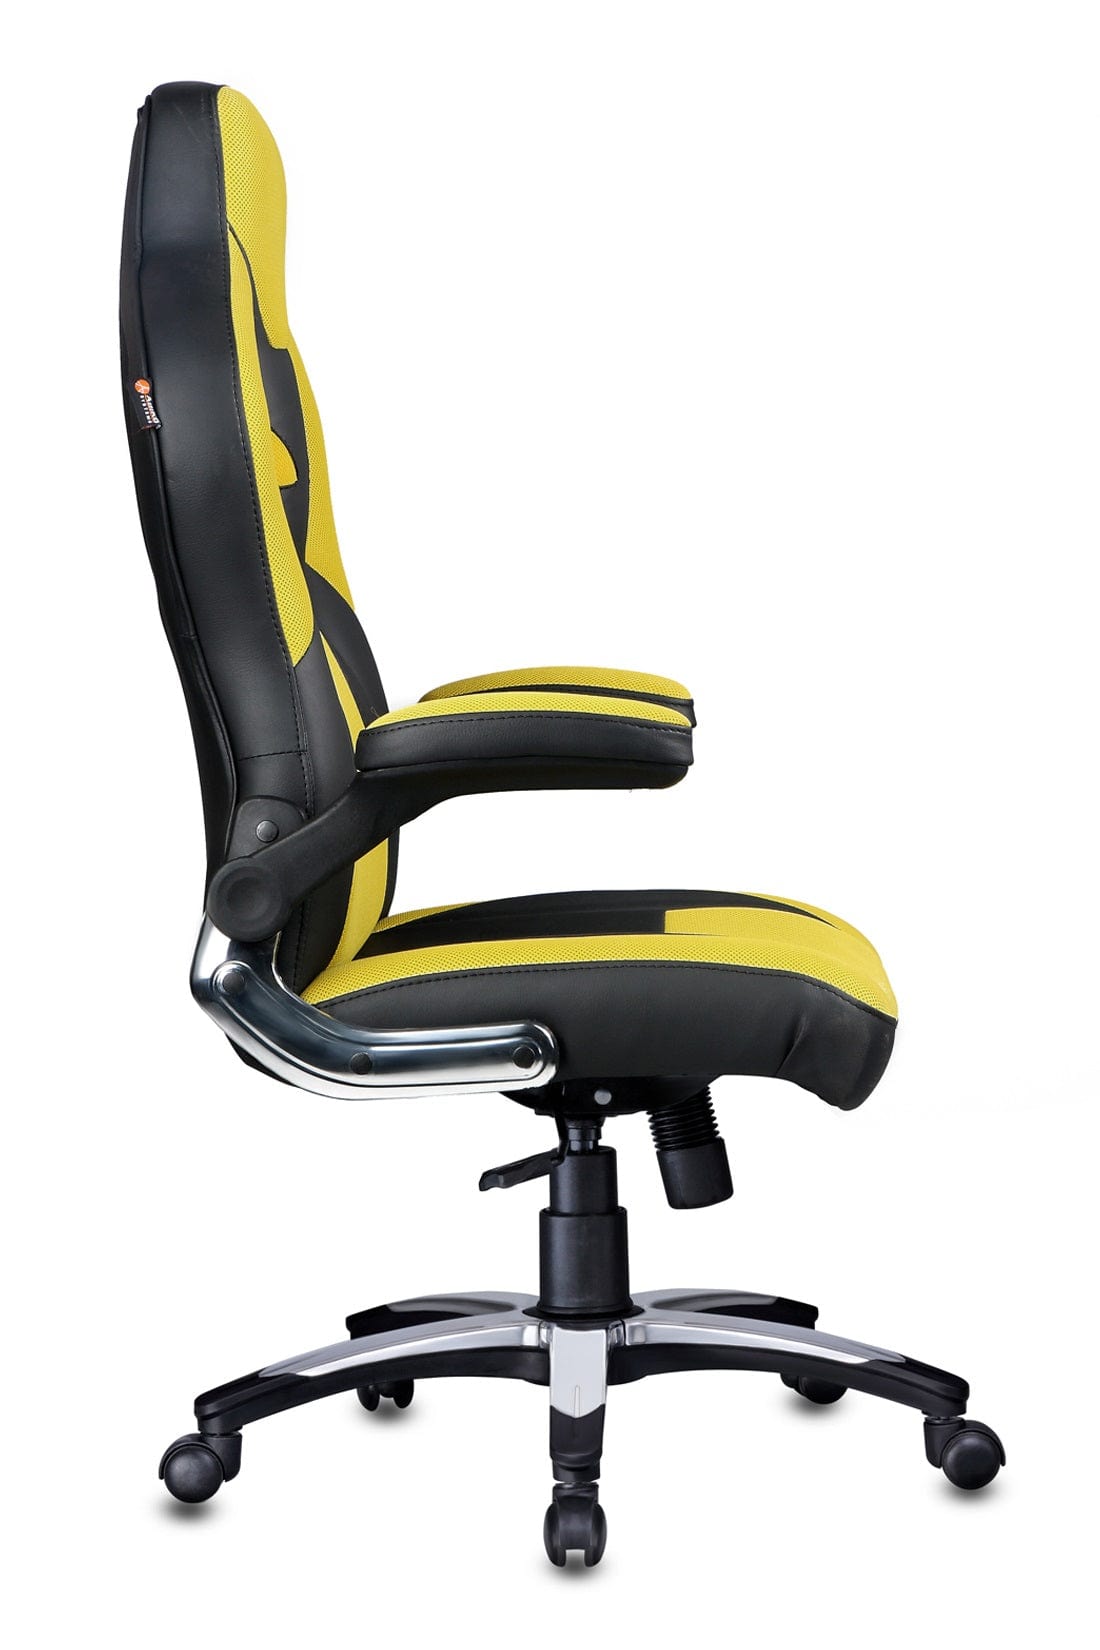 Stylish Designer Office chair in Black / Yellow